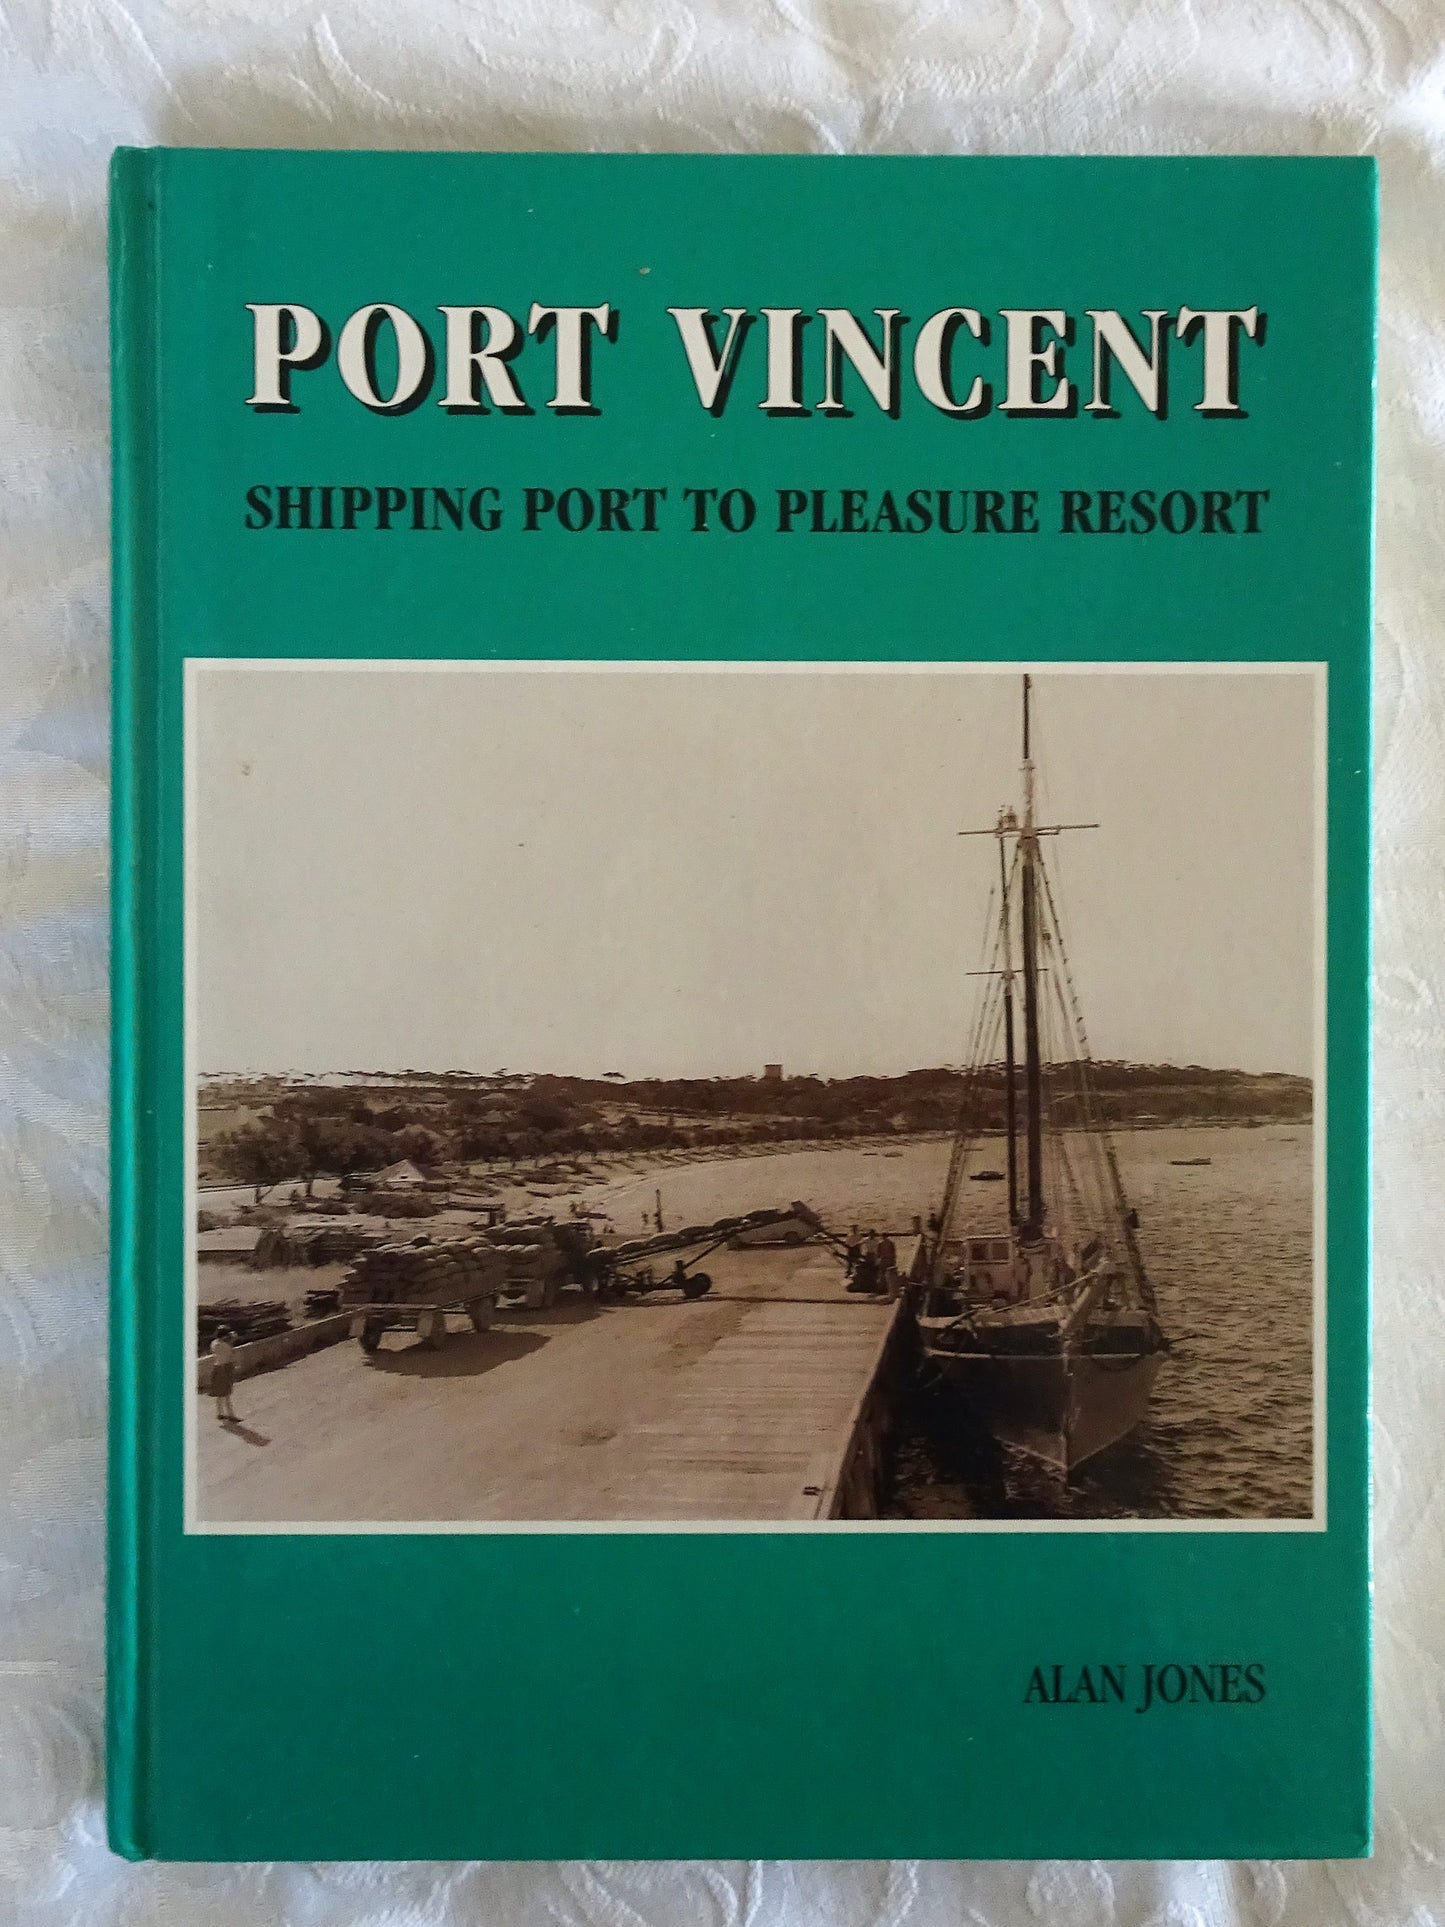 Port Vincent Shipping Port To Pleasure Resort by Alan Jones